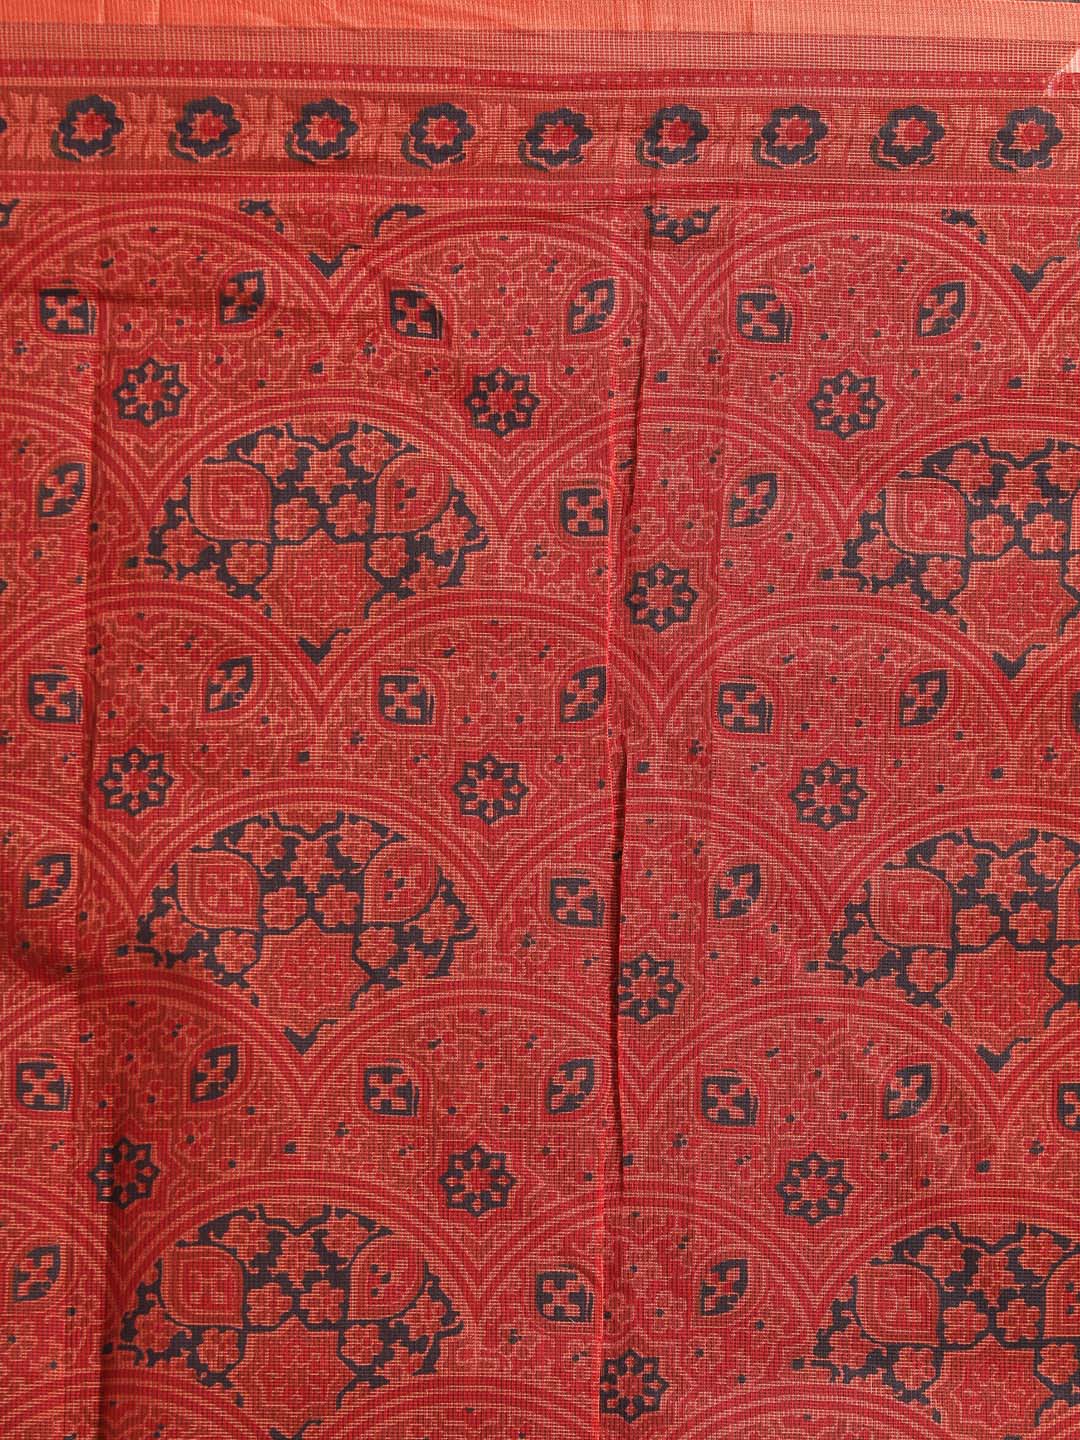 Indethnic Printed Super Net Saree in Rust - Saree Detail View